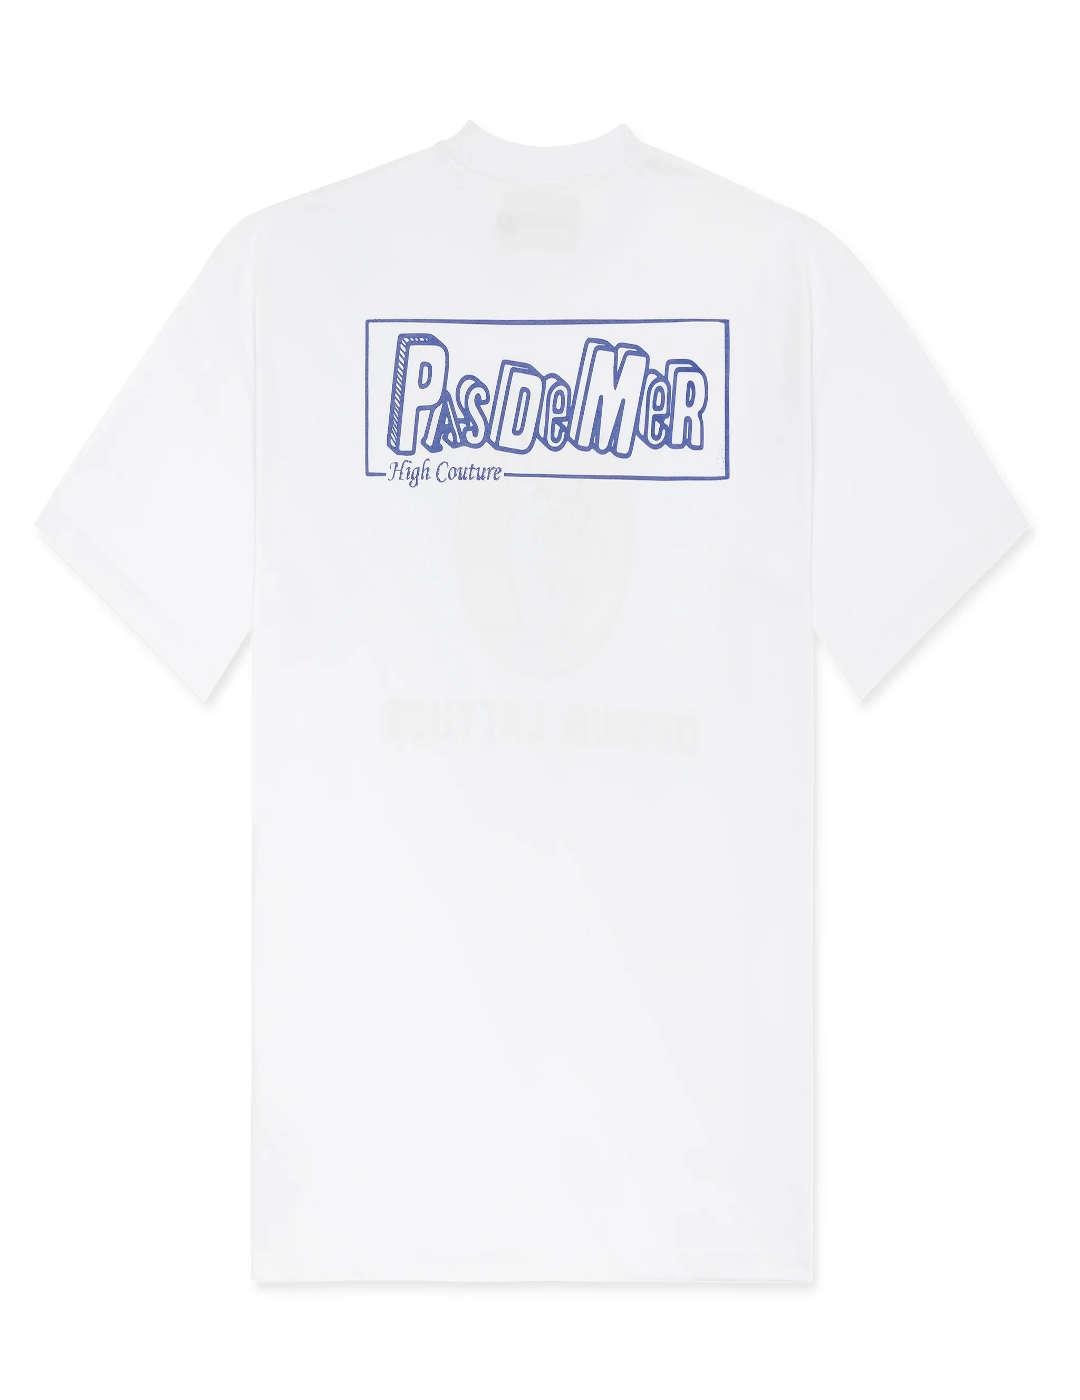 Camiseta Pasdemer Devil´s Lattuce T-Shirt